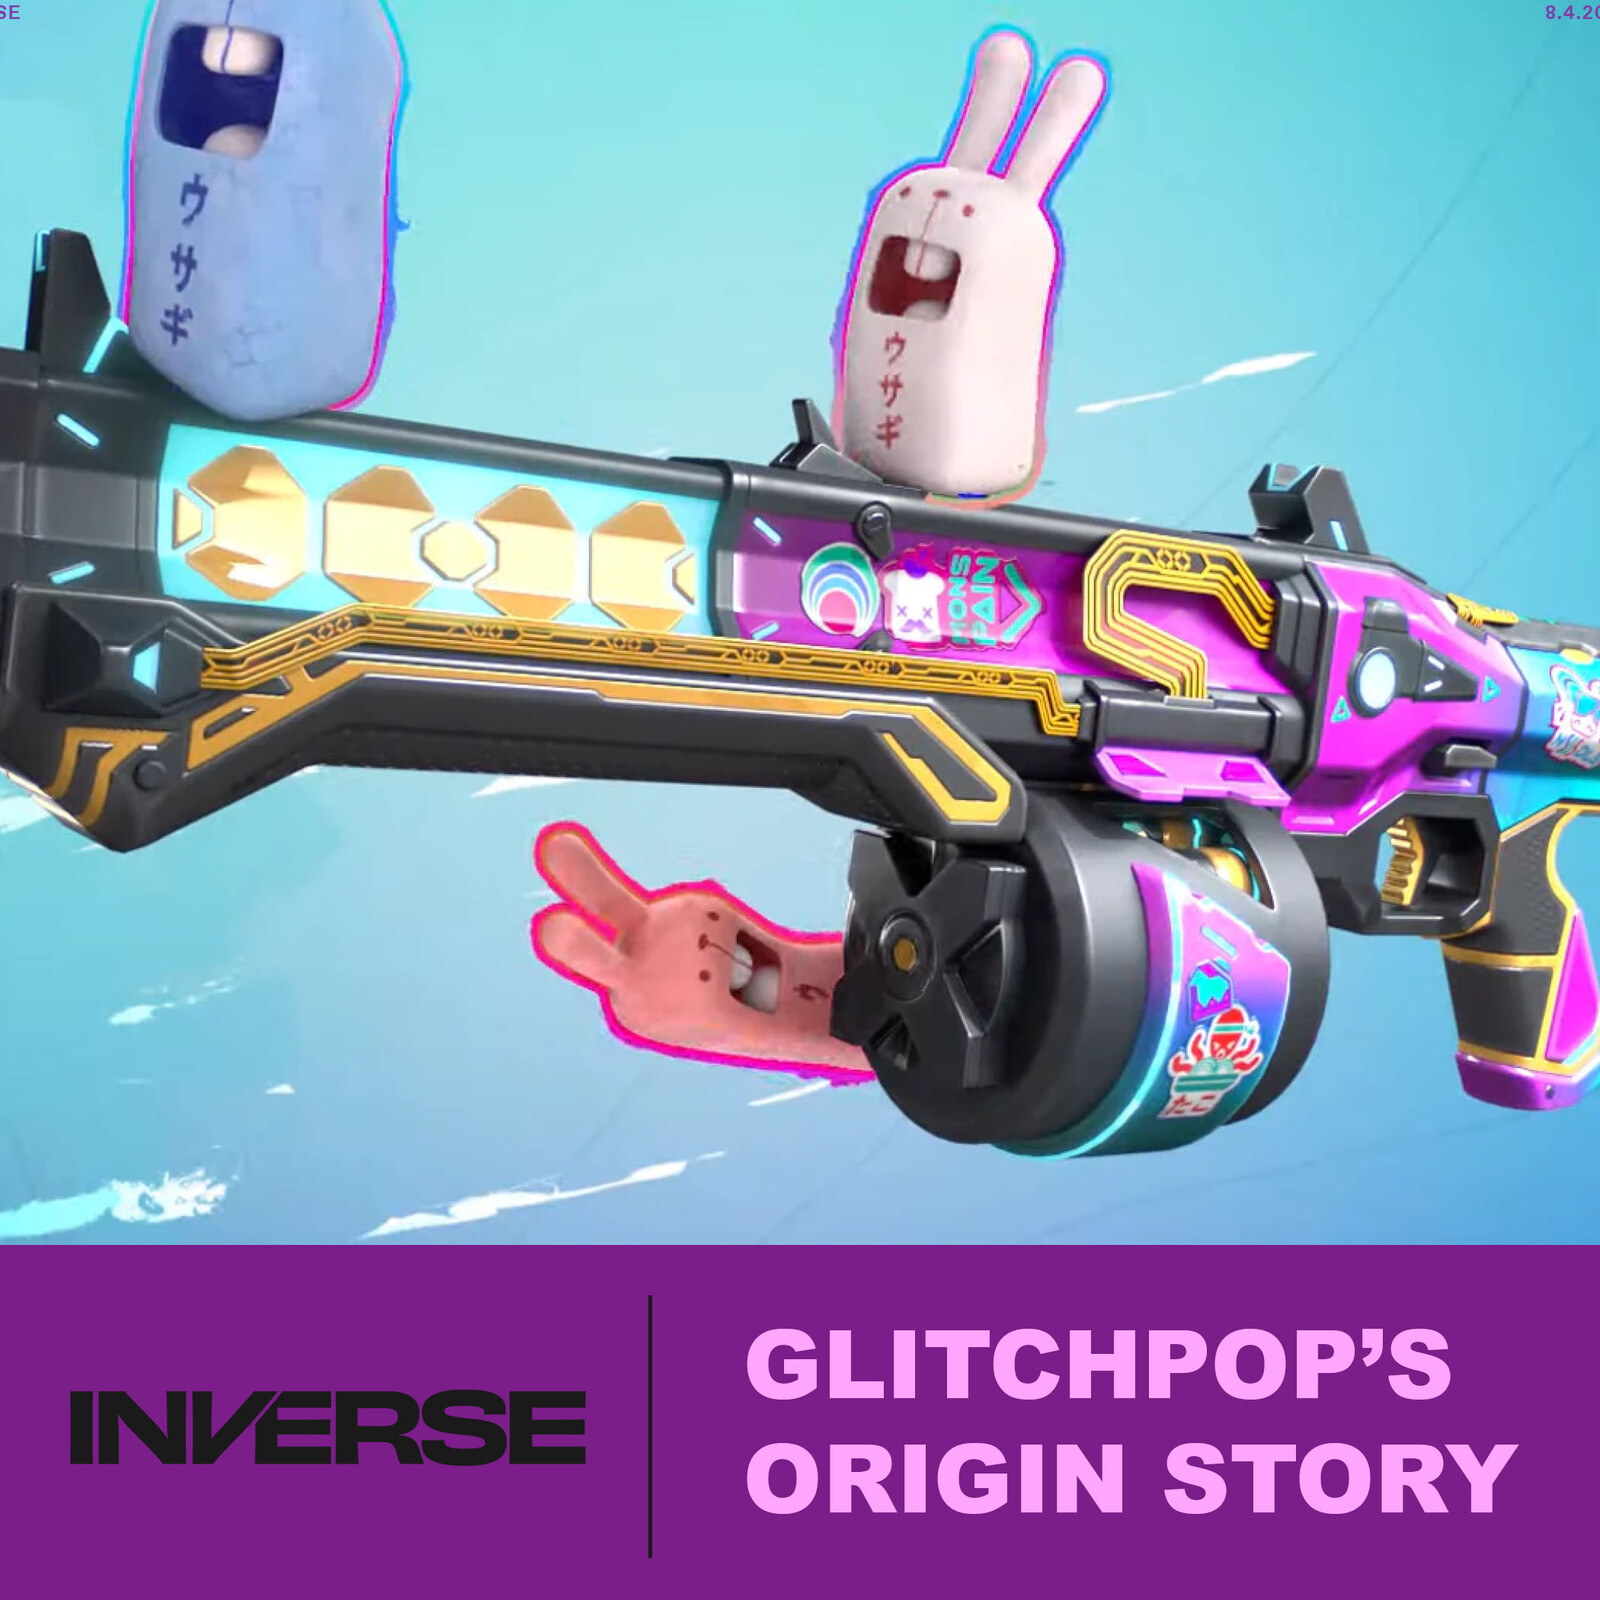 INVERSE - Glitchpop's Surprising Origin Story